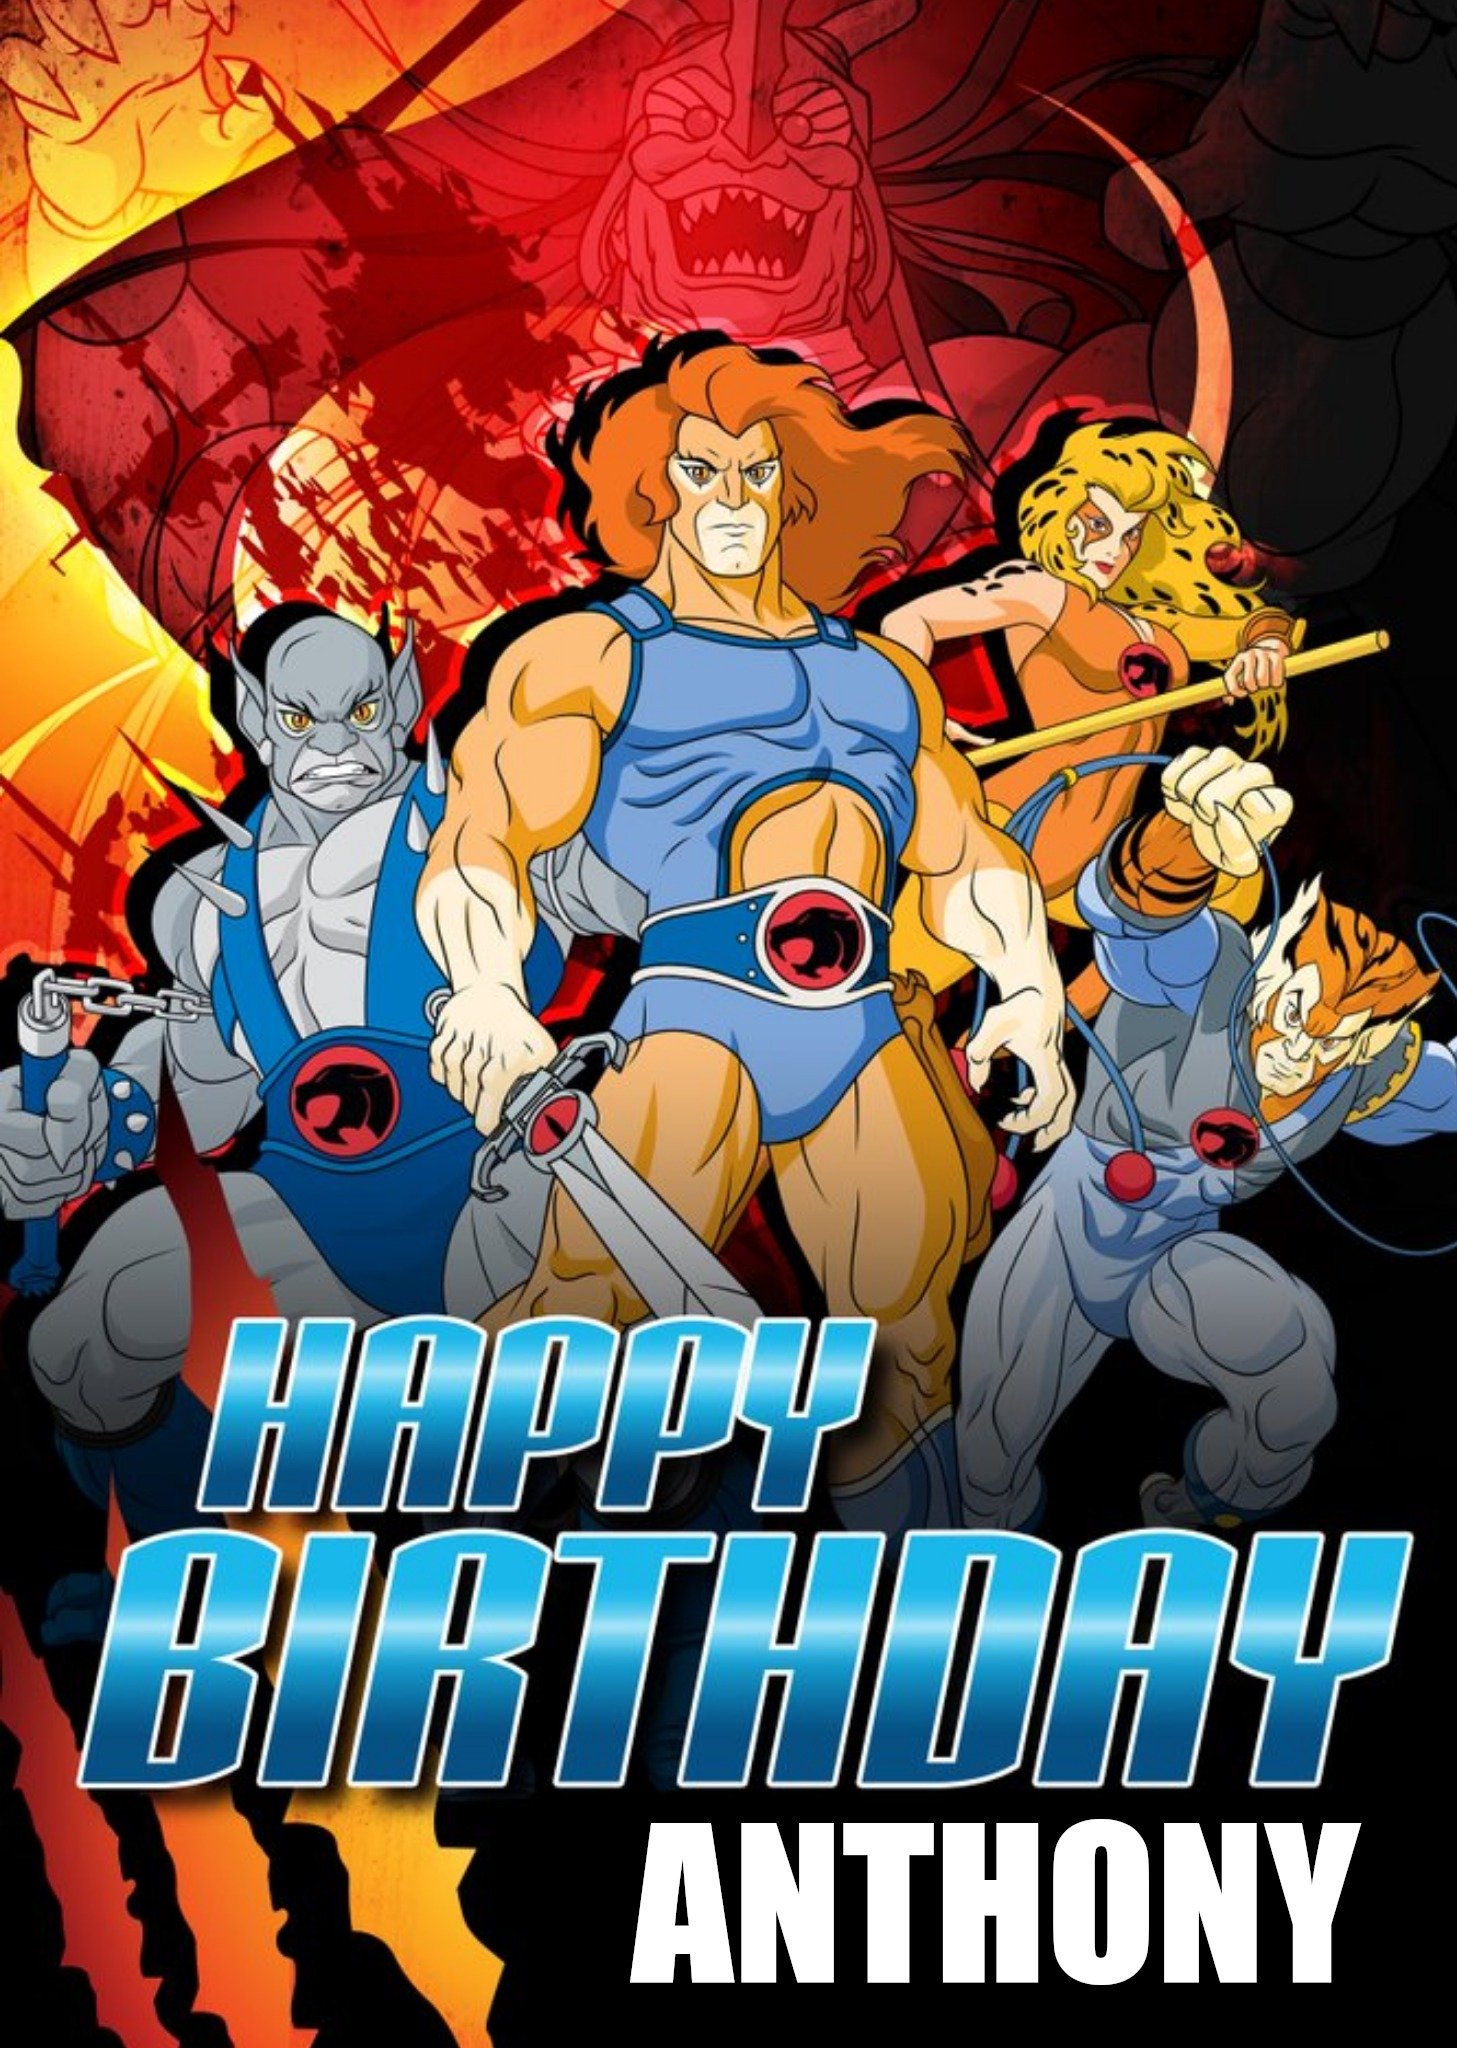 Moonpig Thundercats Characters Birthday Card, Large